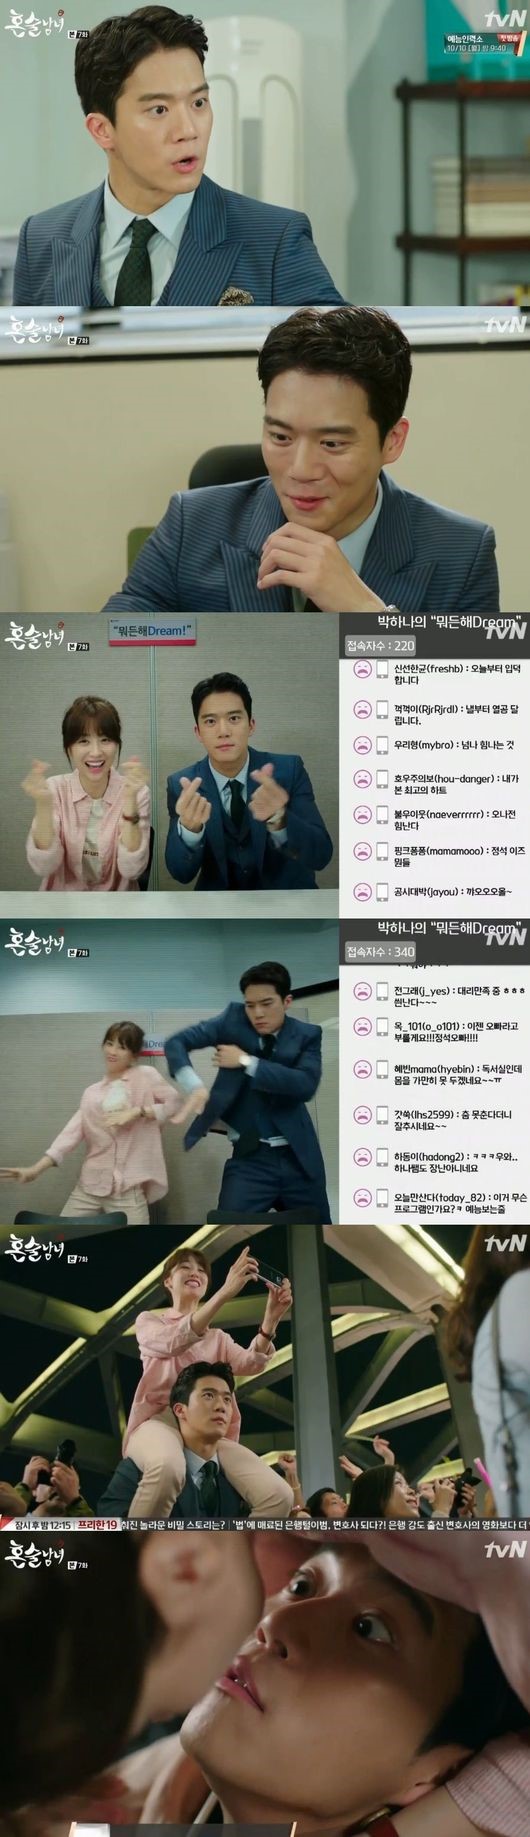  tvN '혼술남녀' 방송화면 캡처